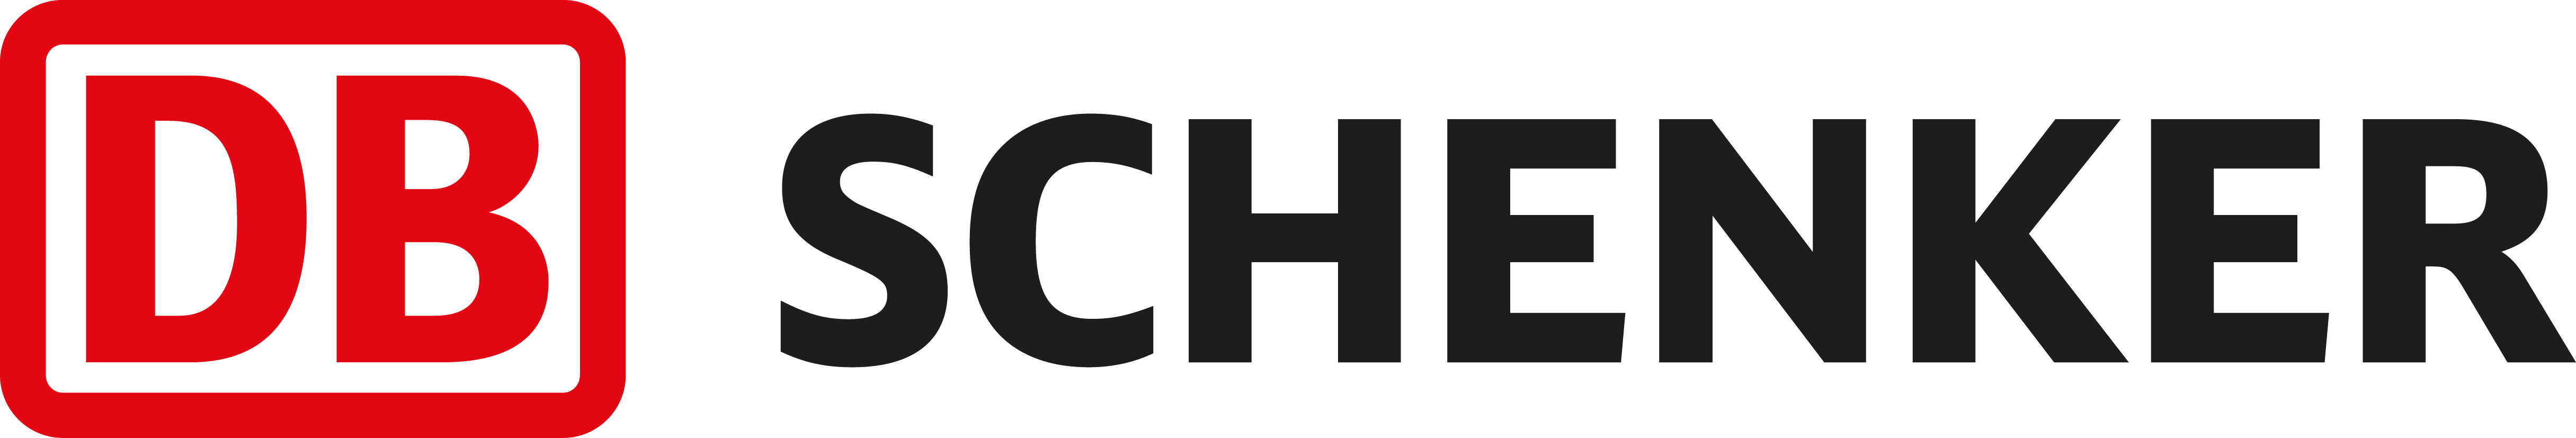 DB Schenker logotyp